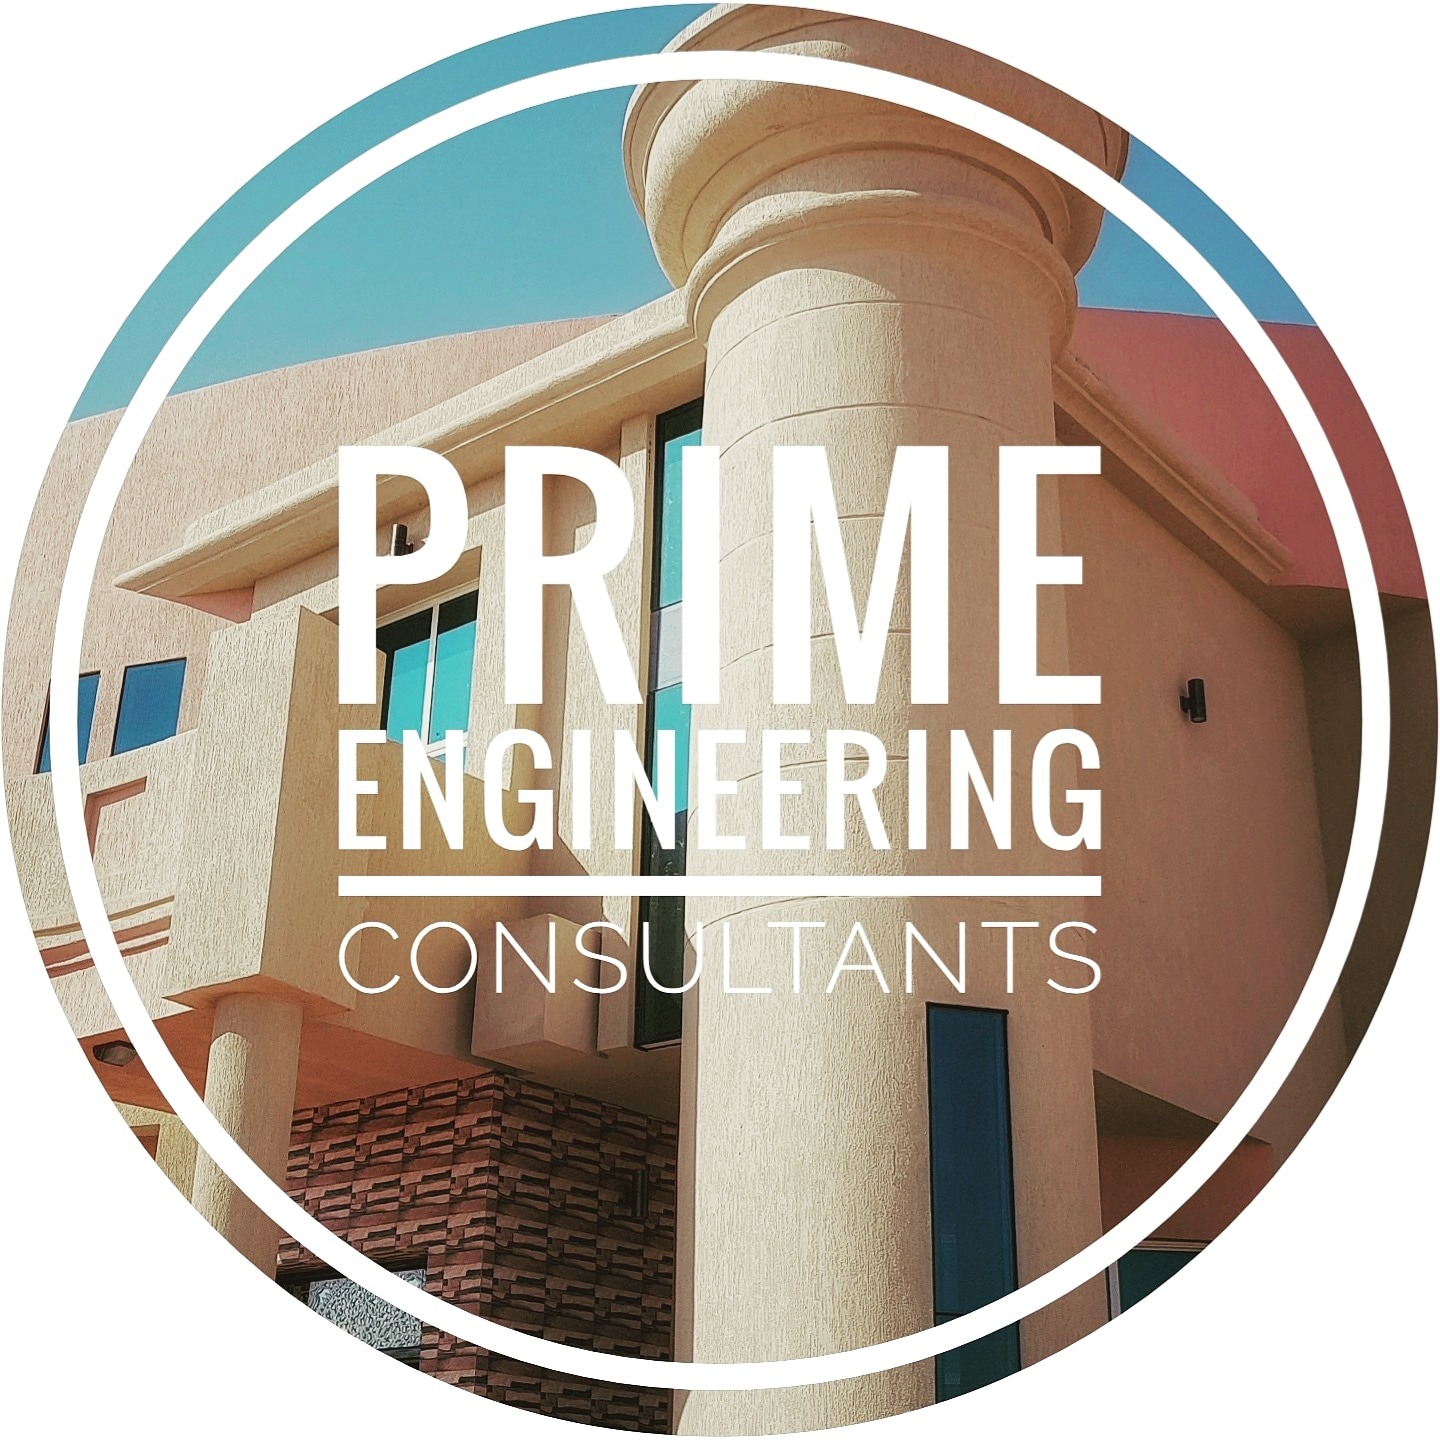 UAE's Prime Engineering counsaltant